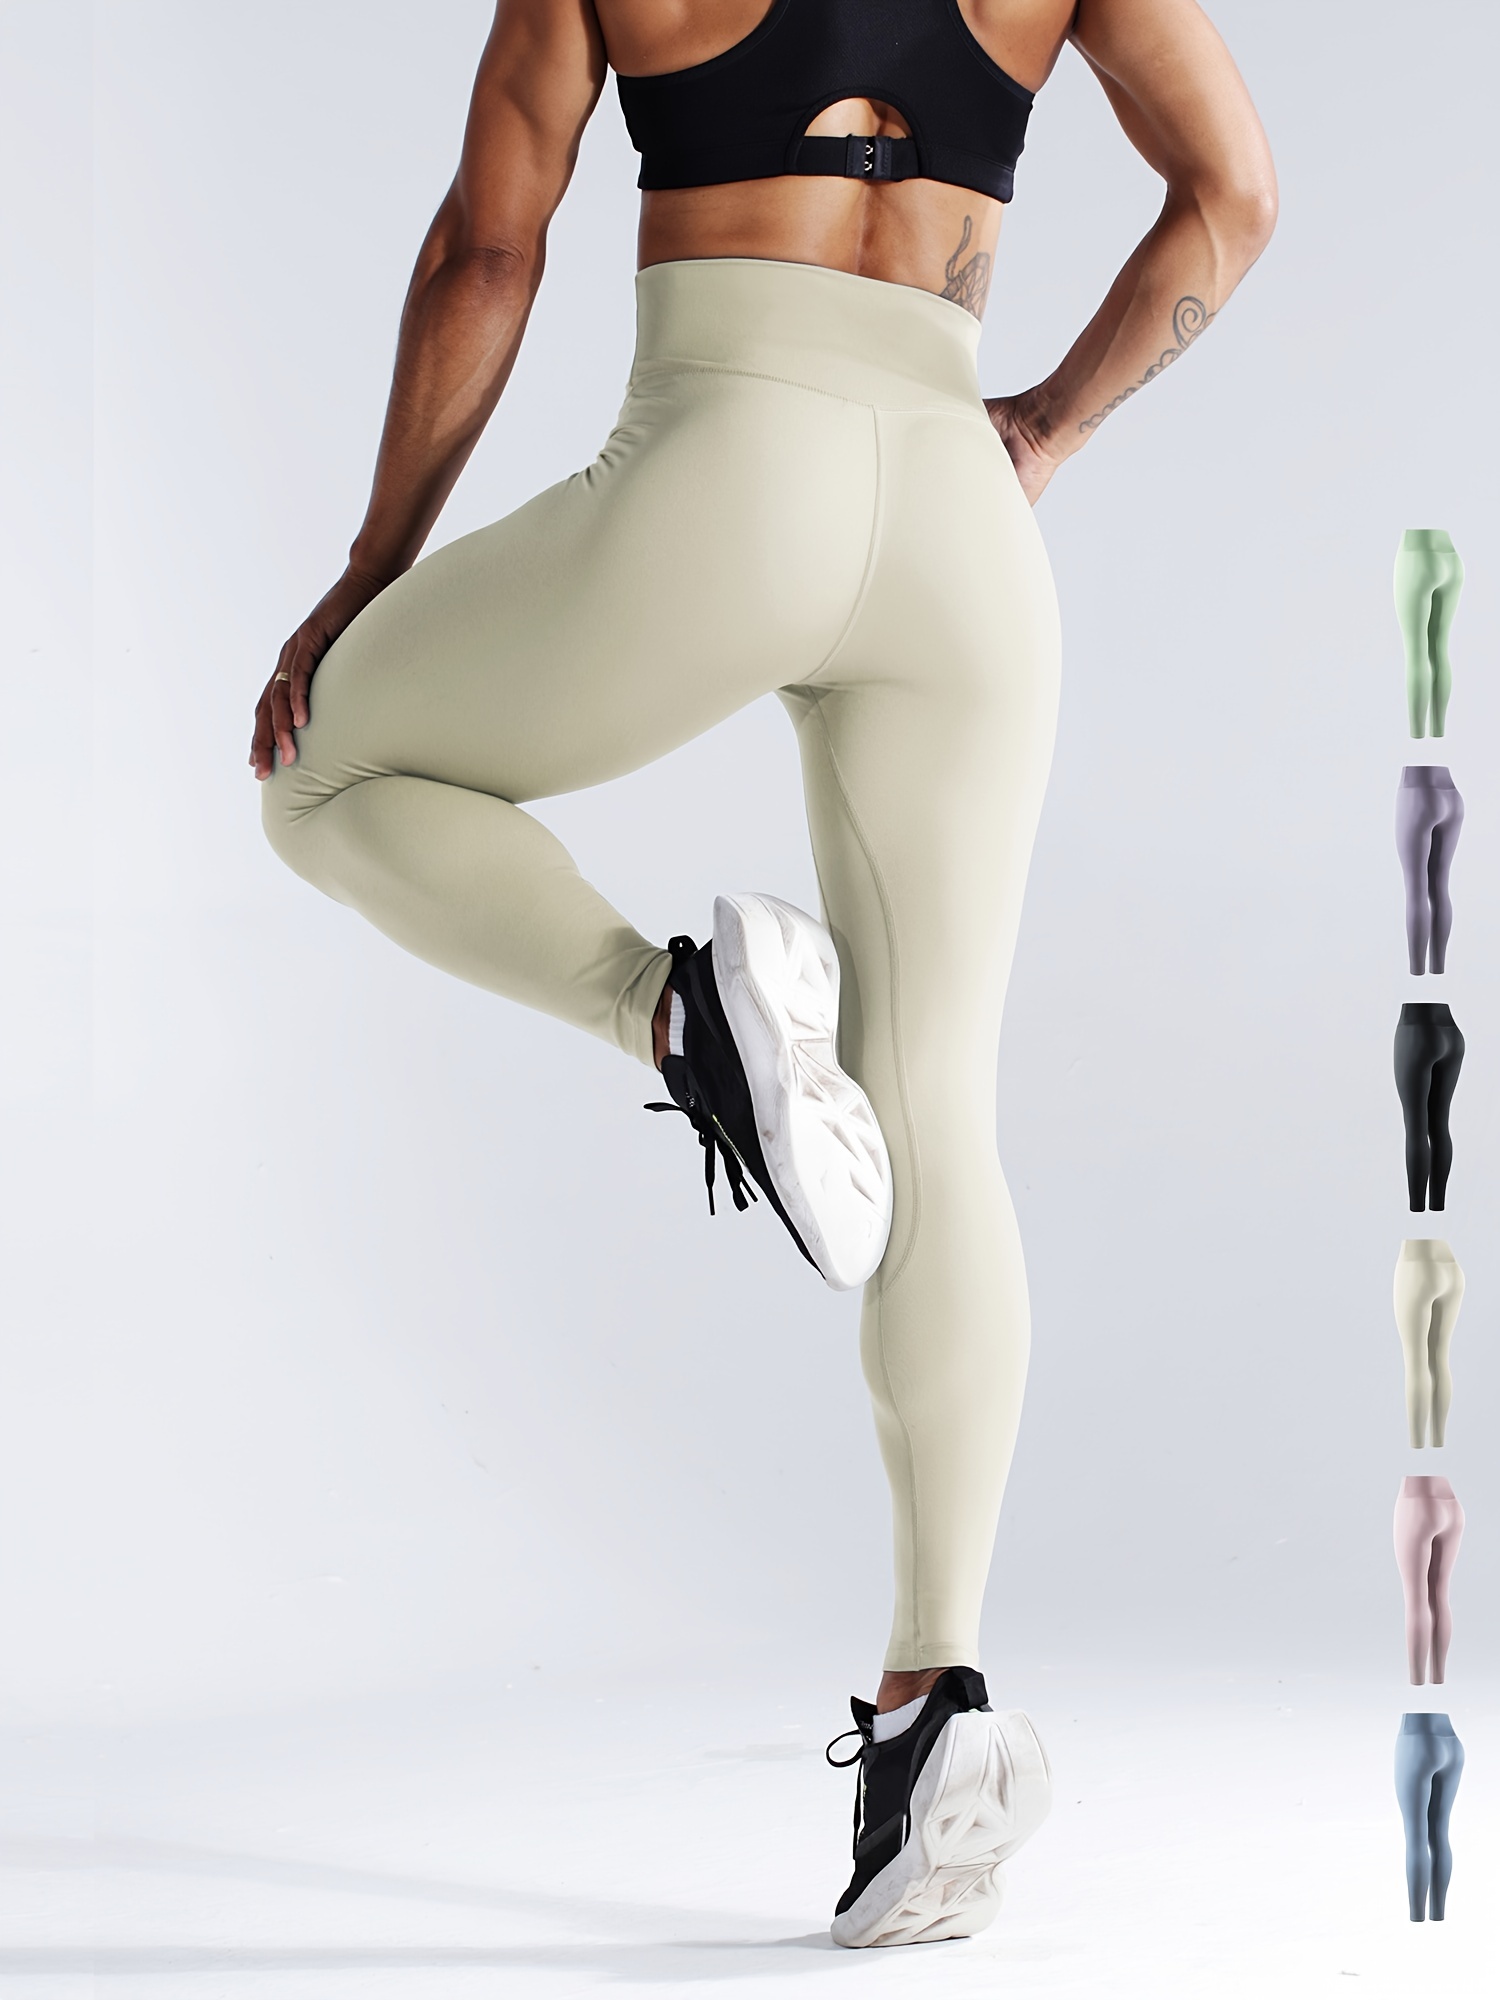 safuny Women's Slim Yoga Capris Legging Athletic Solid Color